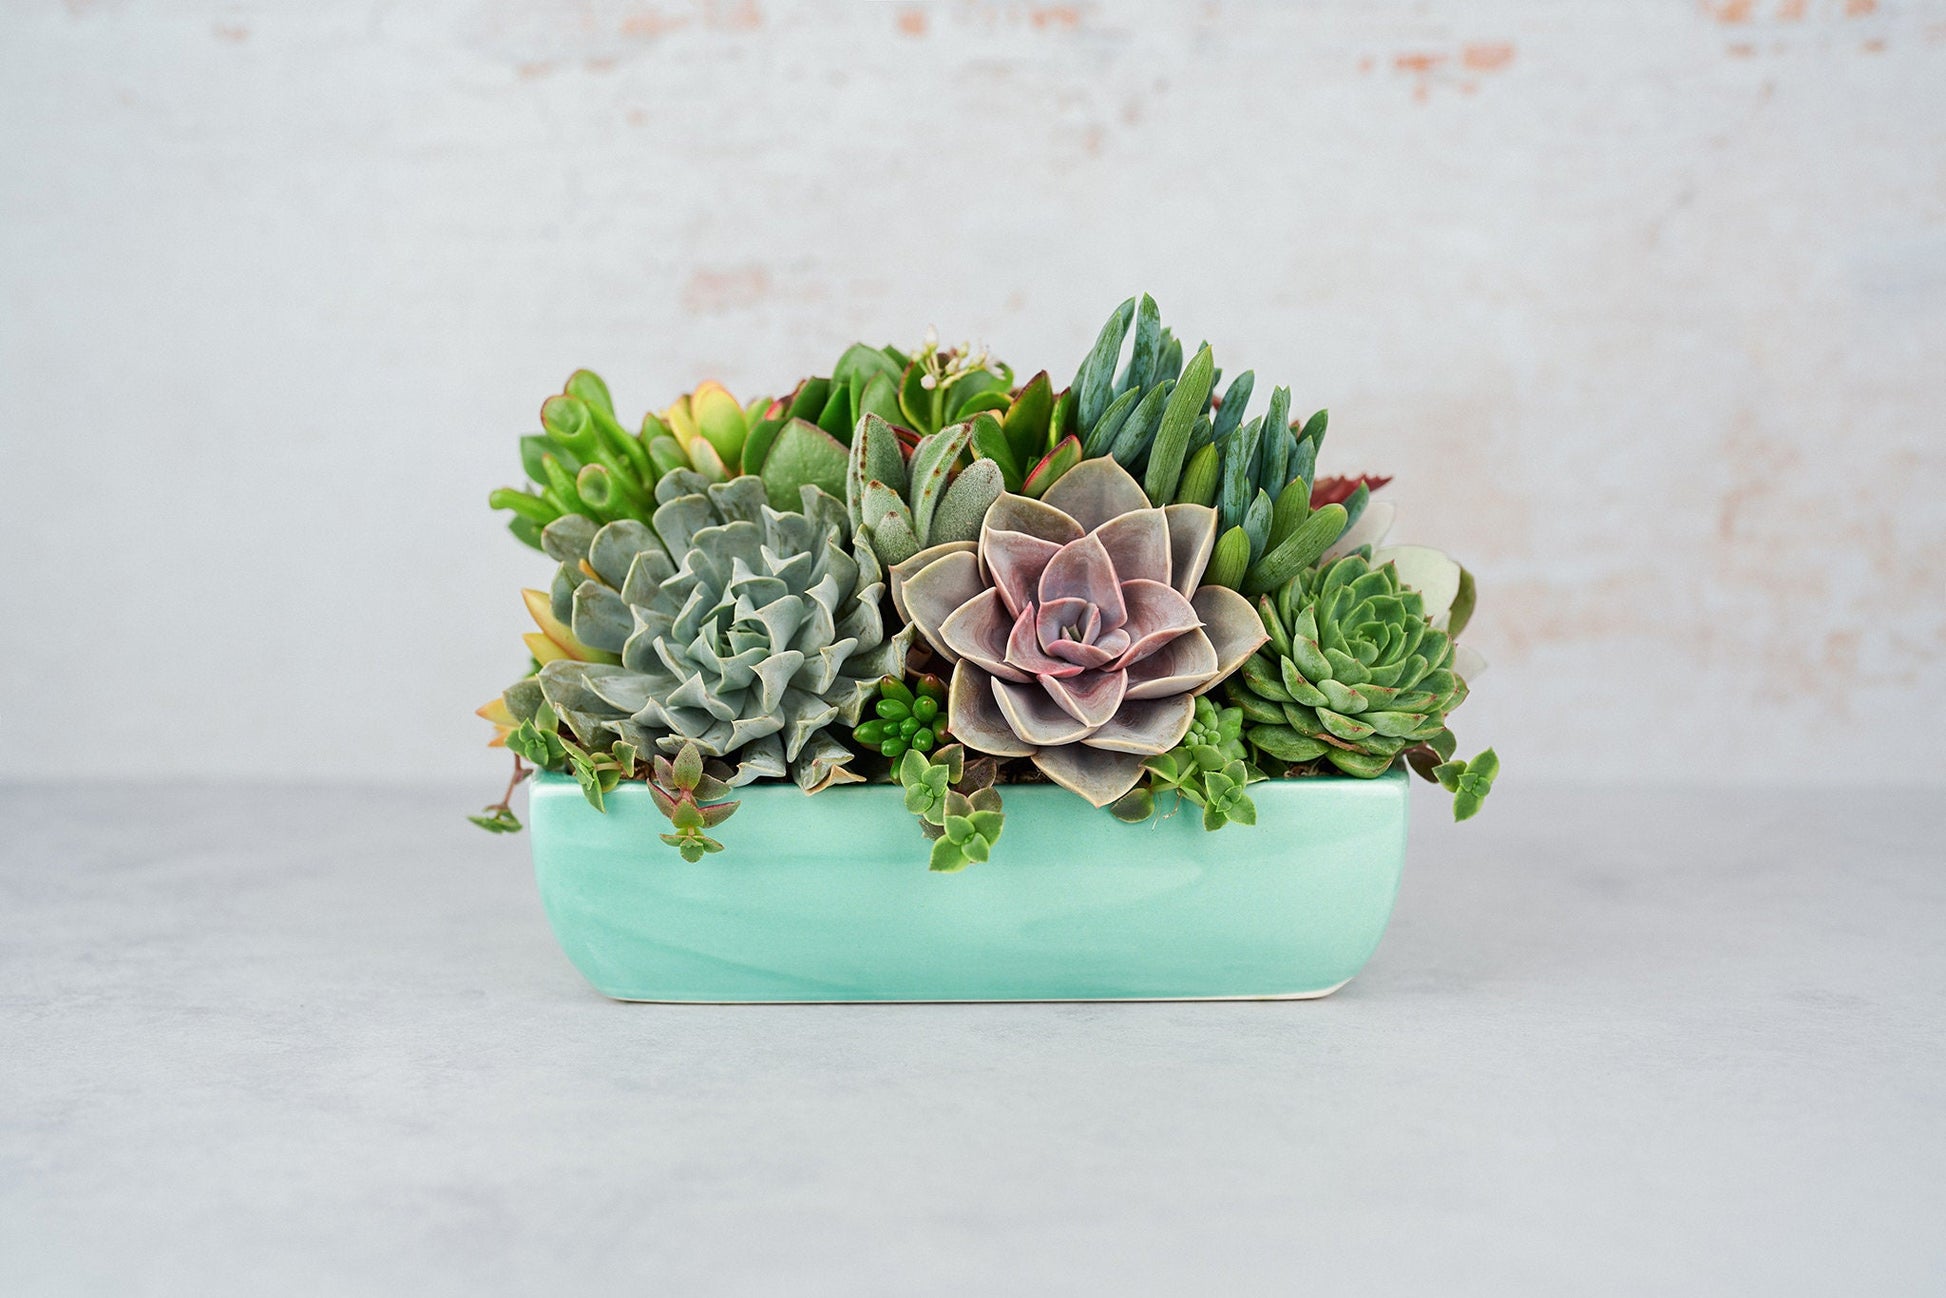 Aqua Dish Succulent Arrangement Planter: Modern Living Succulent Gift, Centerpiece for Weddings & Events, Housewarming Gift